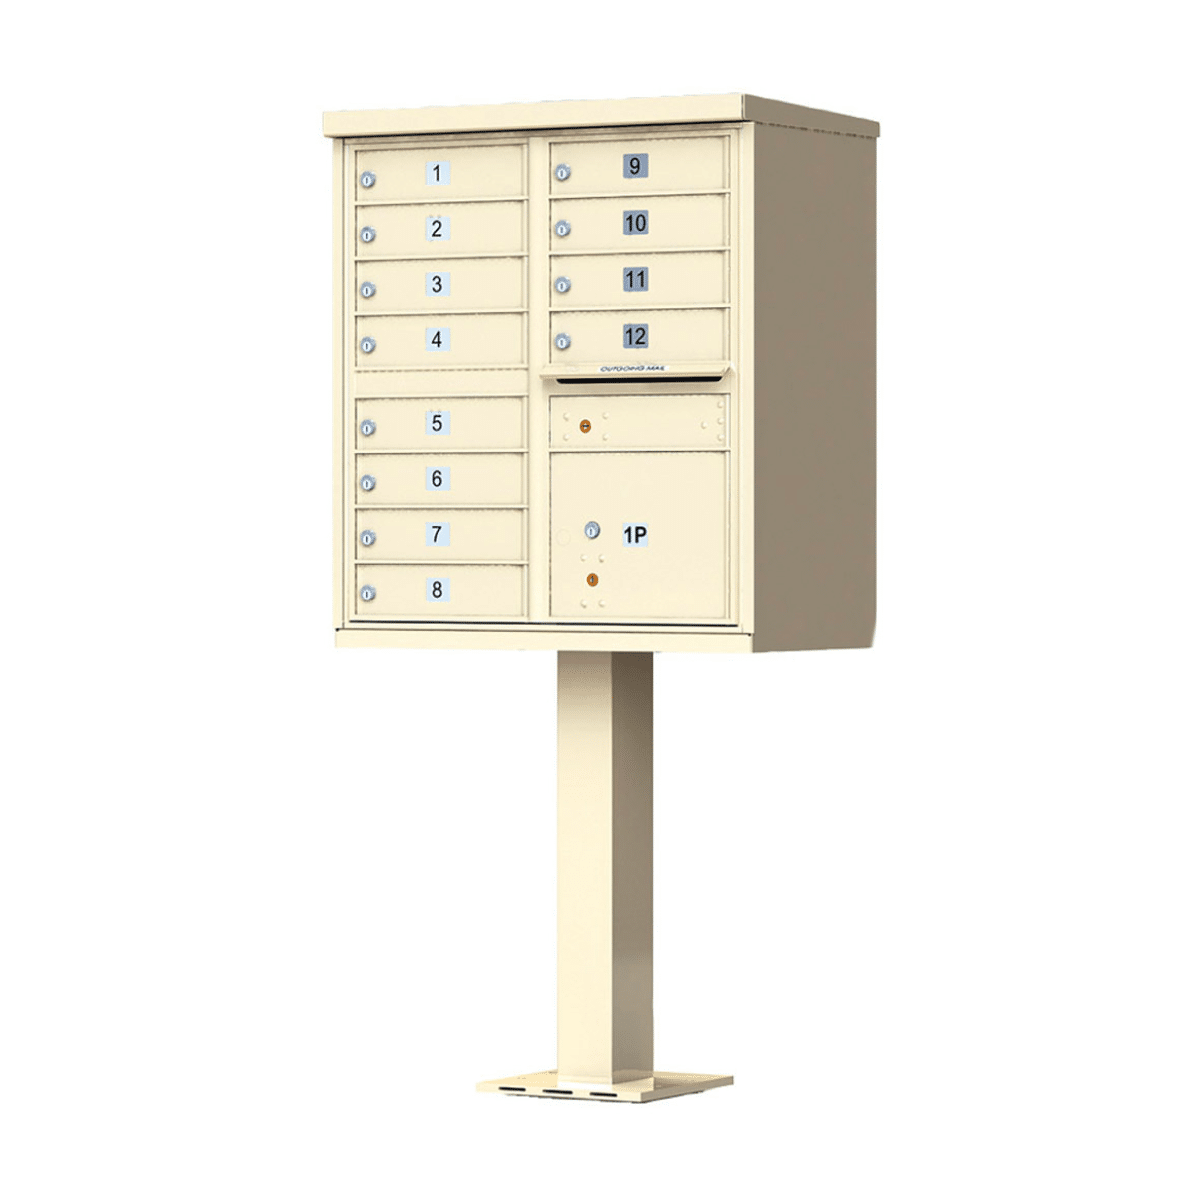 Florence CBU Cluster Mailbox – 12 Tenant Doors, 1 Parcel Locker Product Image